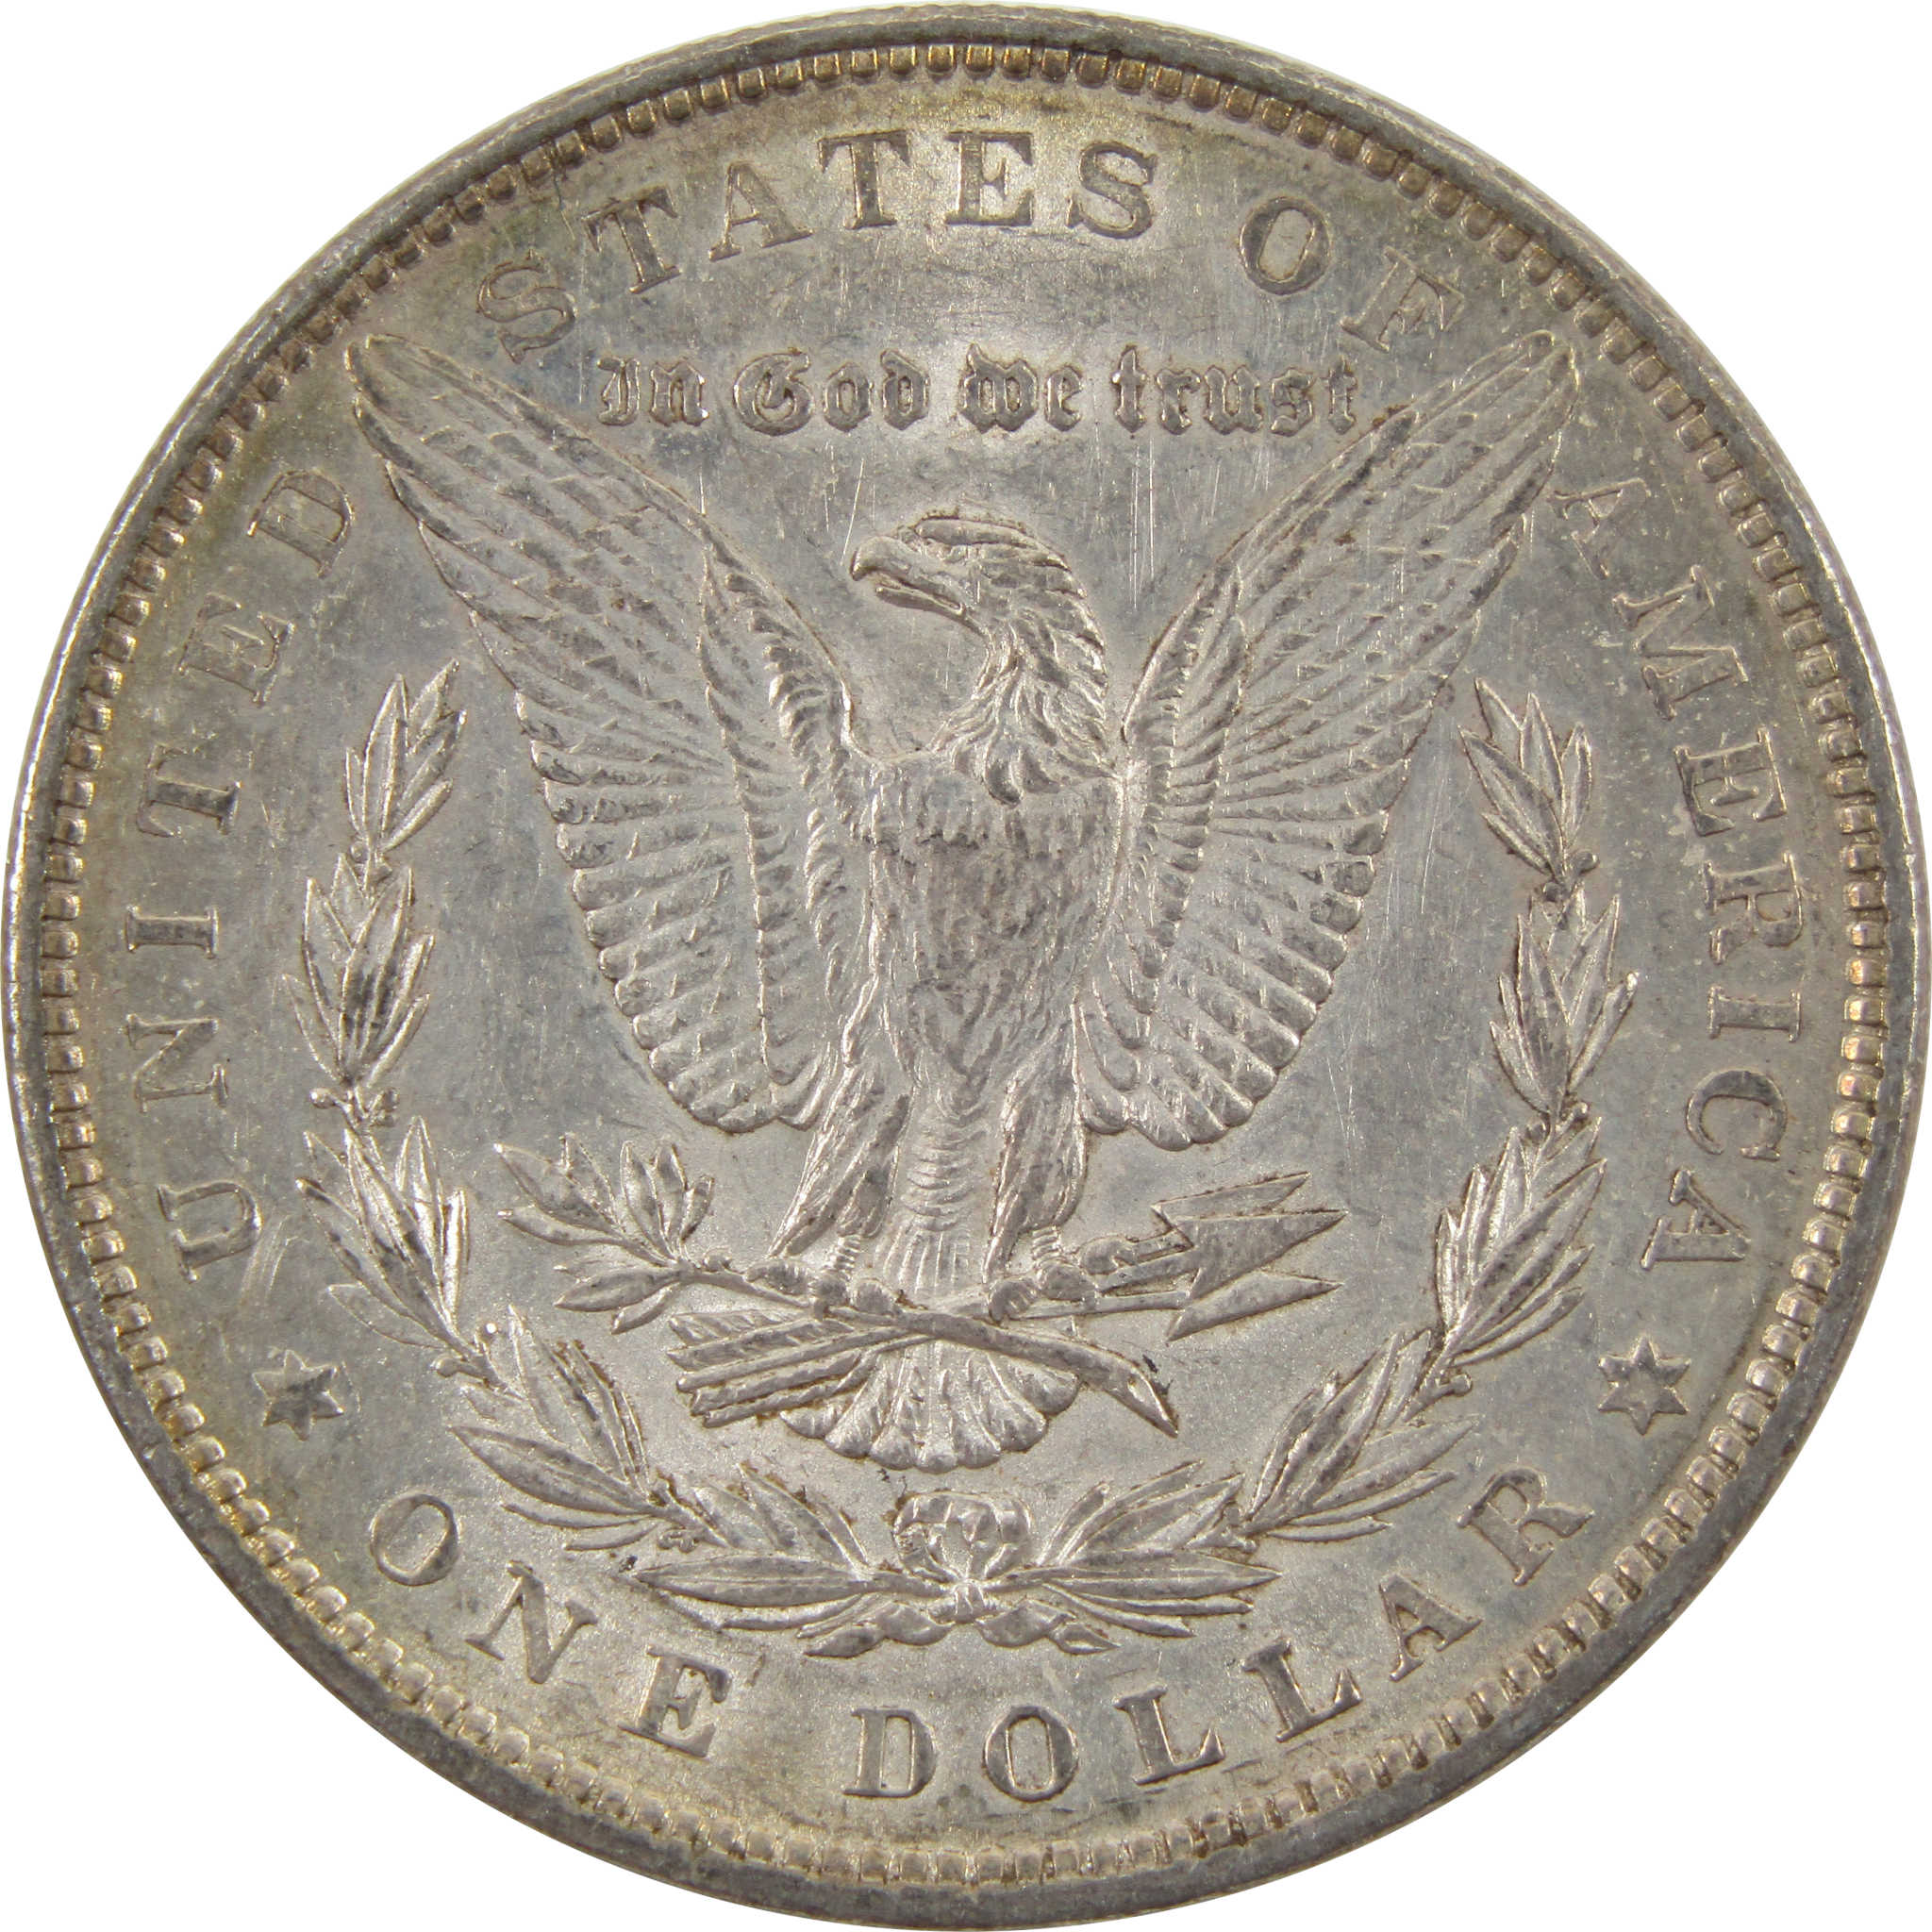 1879 Morgan Dollar Borderline Uncirculated Silver $1 Coin SKU:I11001 - Morgan coin - Morgan silver dollar - Morgan silver dollar for sale - Profile Coins &amp; Collectibles